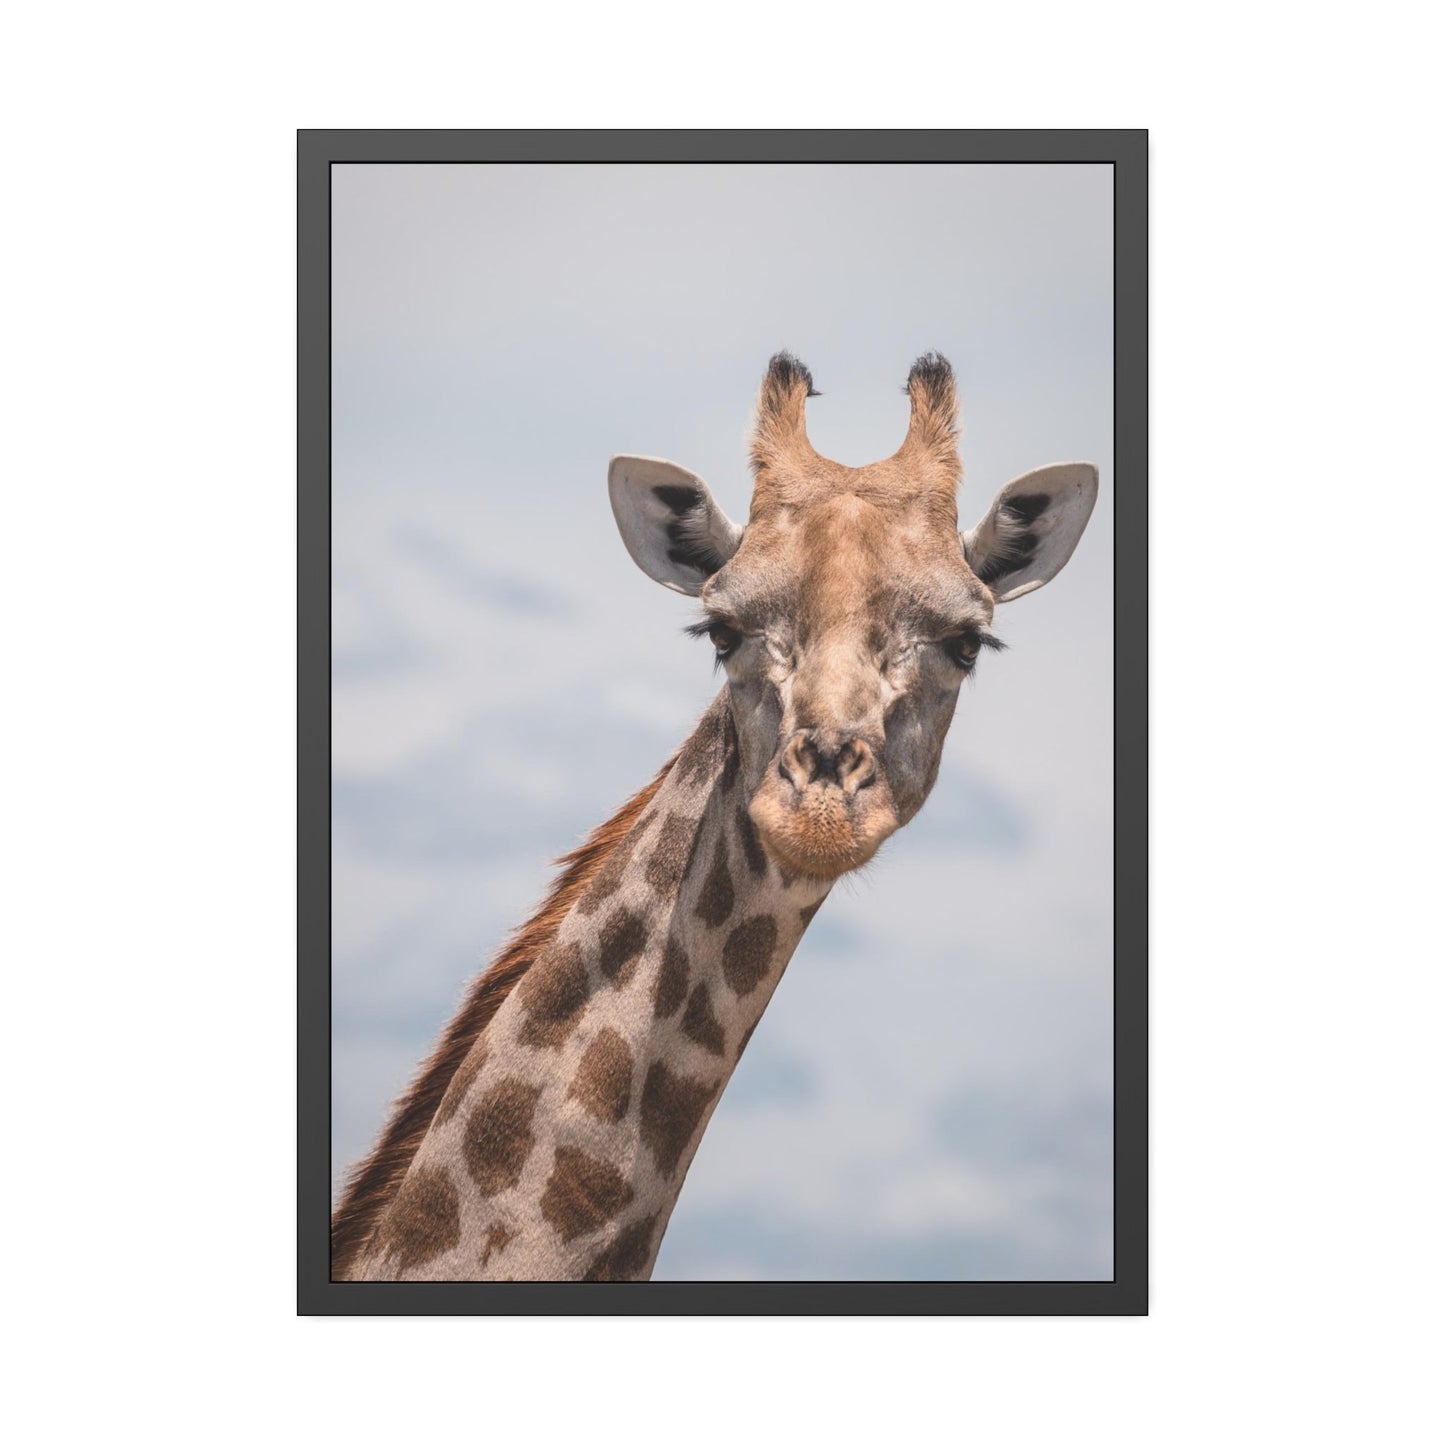 Captivating Creature: A Stunning Giraffe on Canvas & Poster